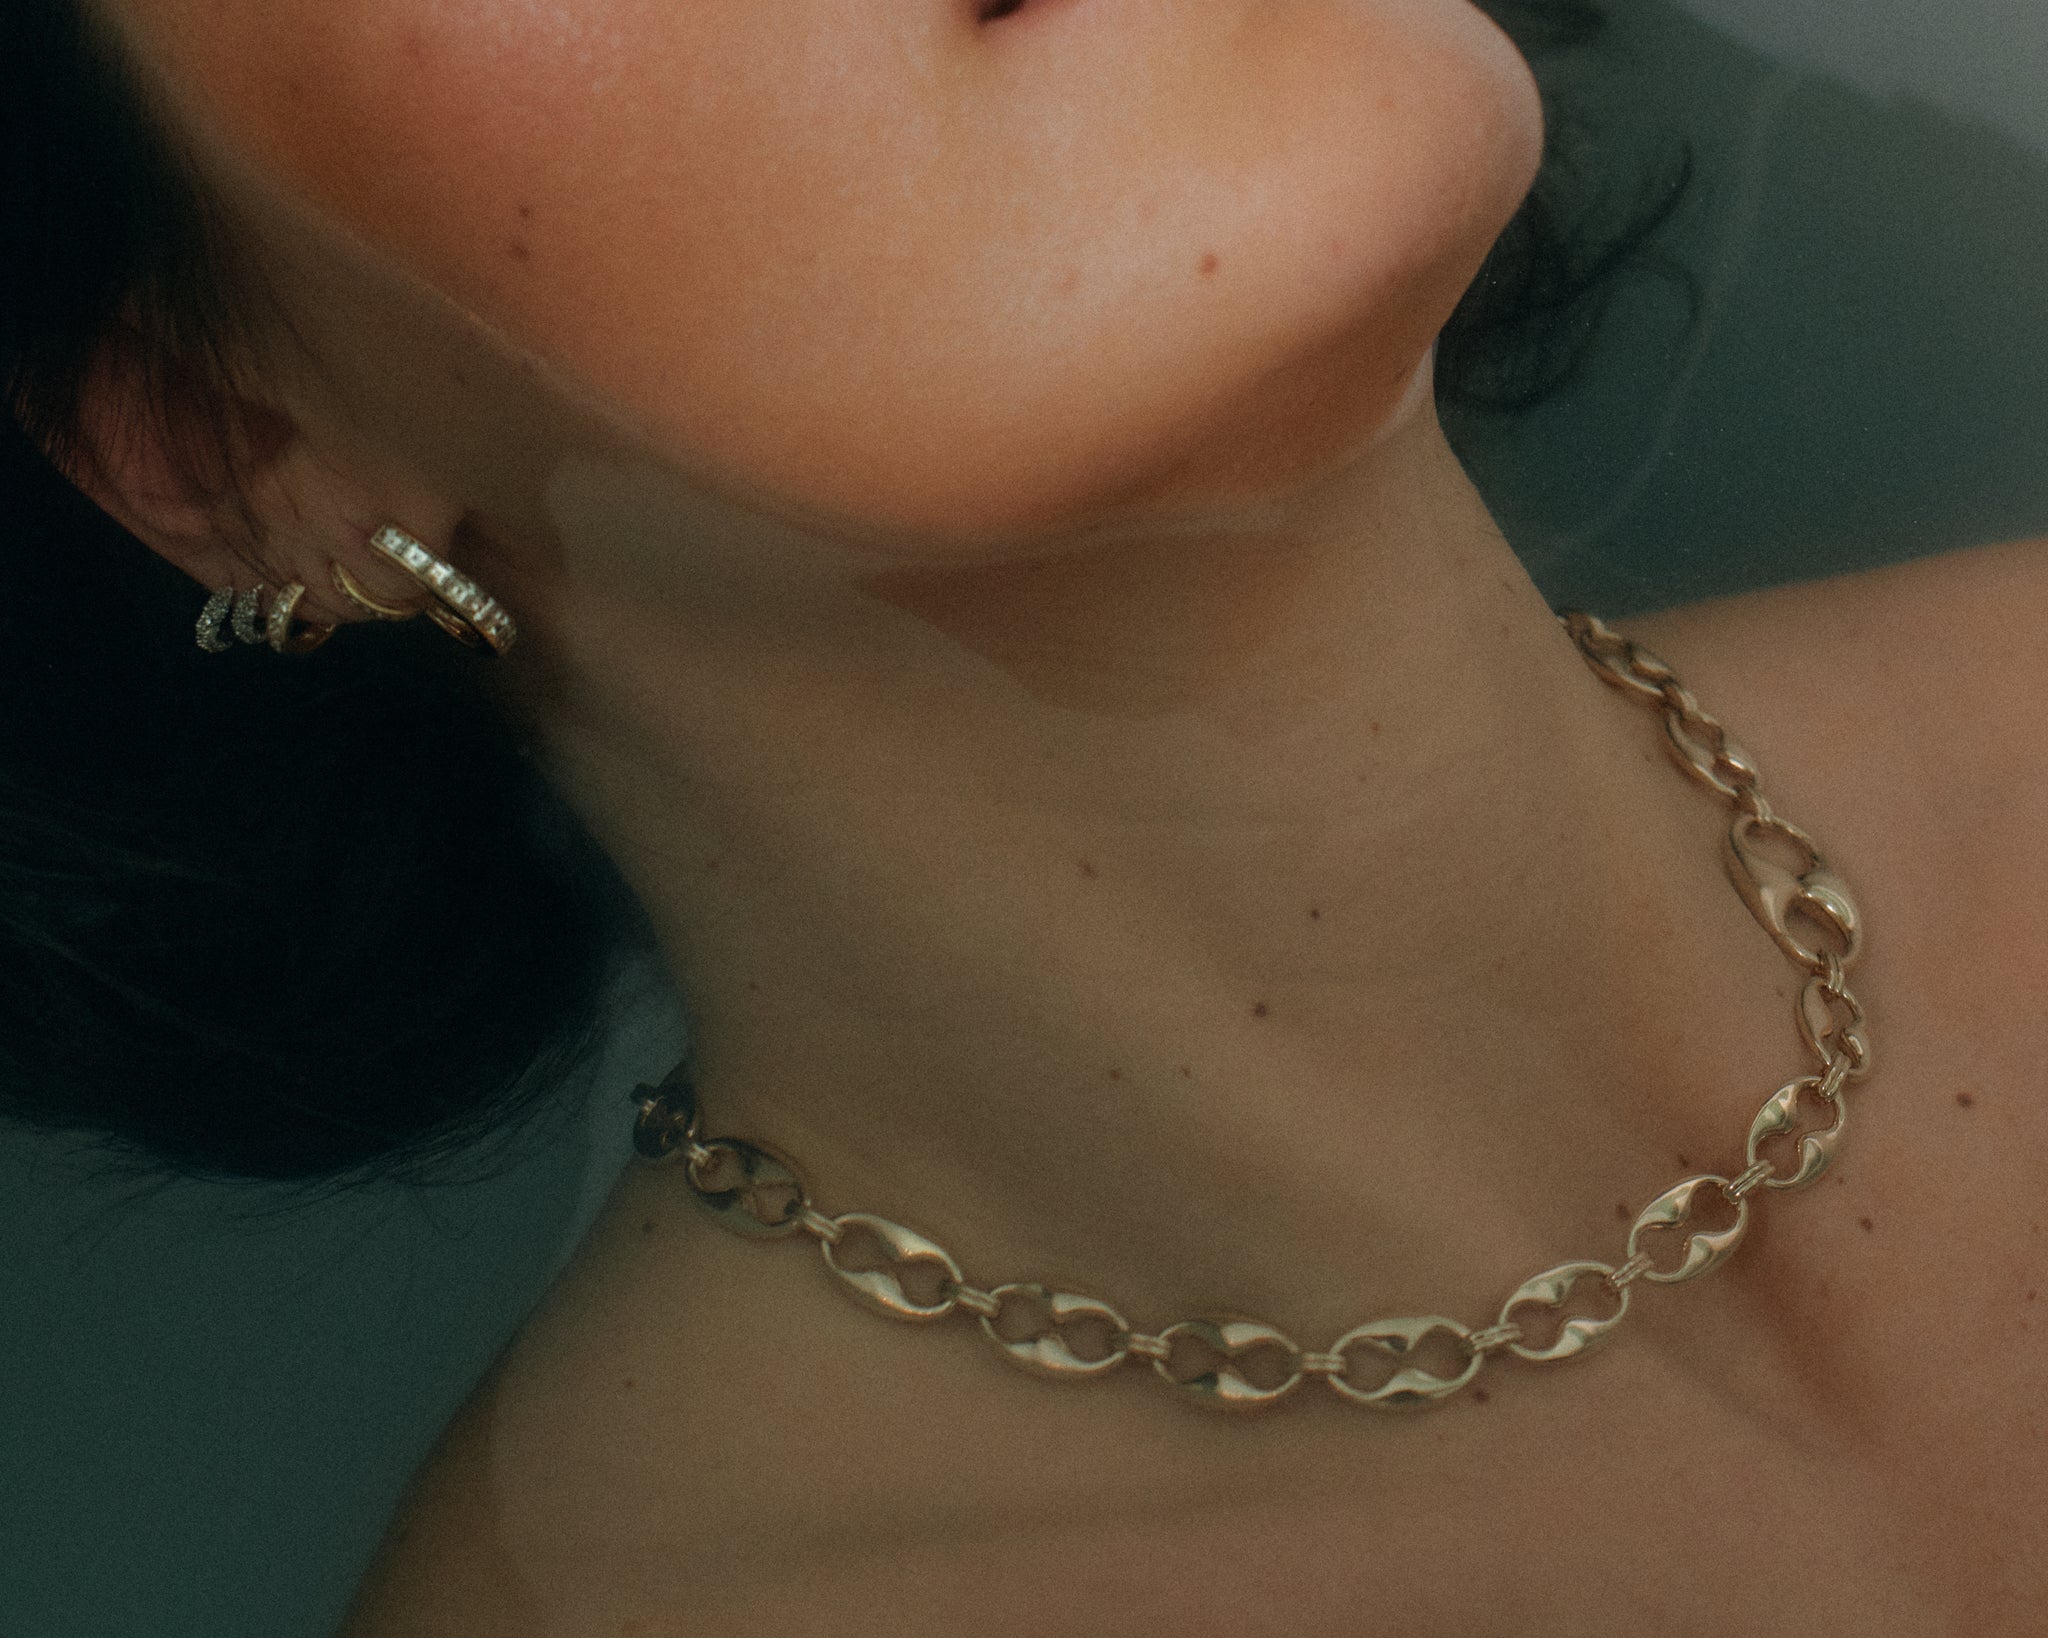 Persephone Necklace